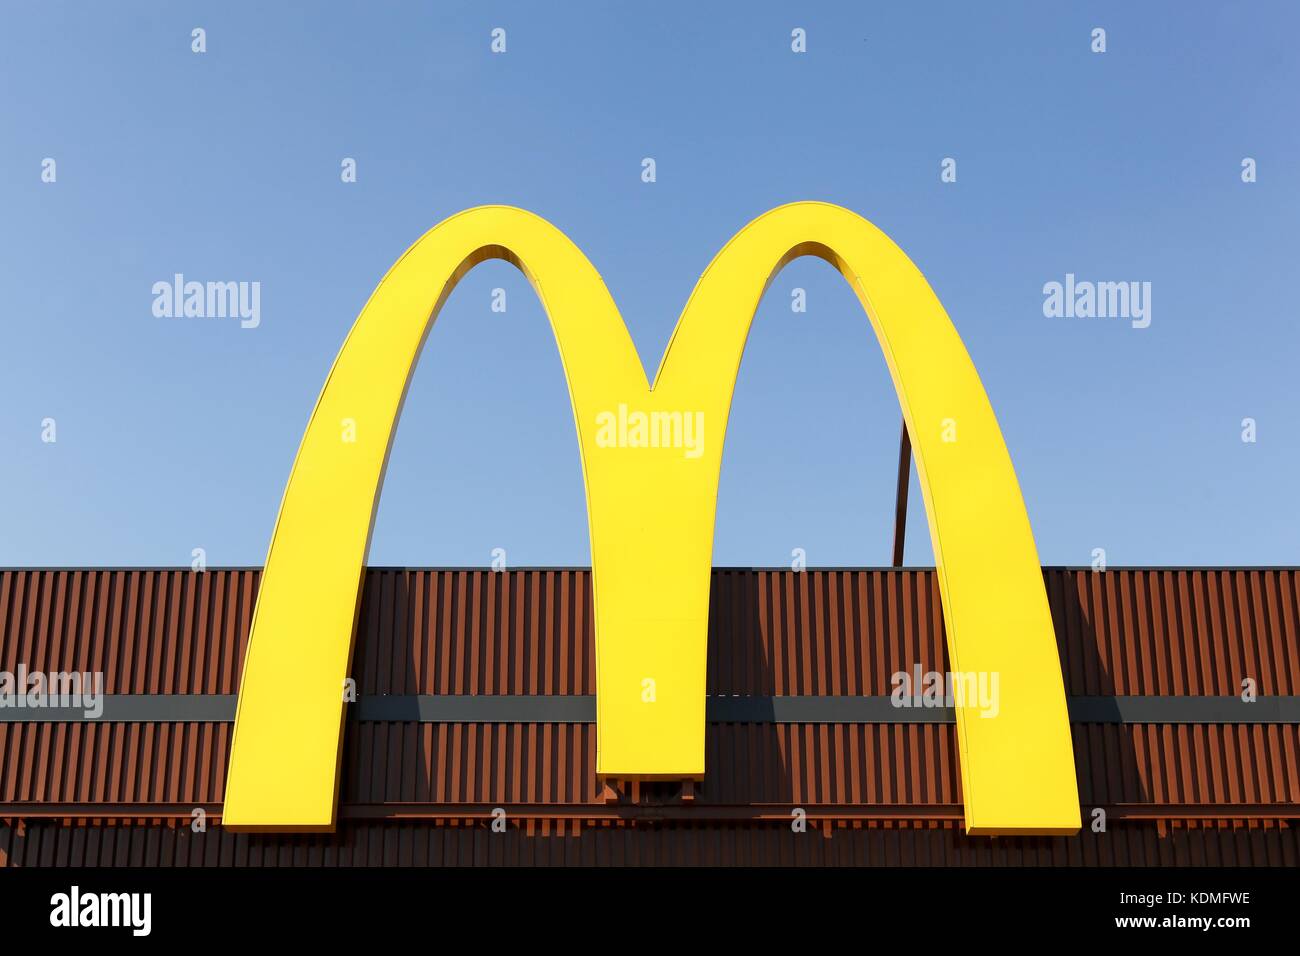 Milano, Italy - July 21, 2015: McDonald's logo on a facade. McDonald's is the world's largest chain of hamburger fast food restaurants Stock Photo